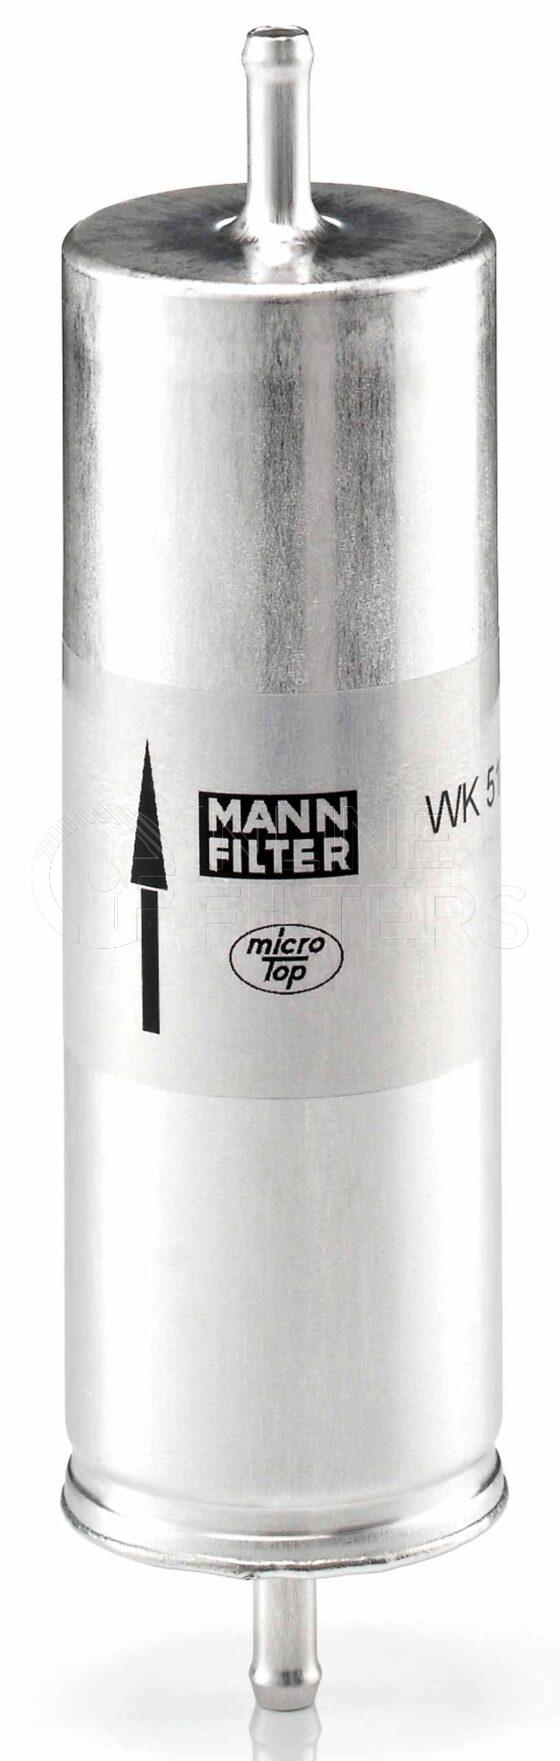 Mann WK 516. Filter Type: Fuel.